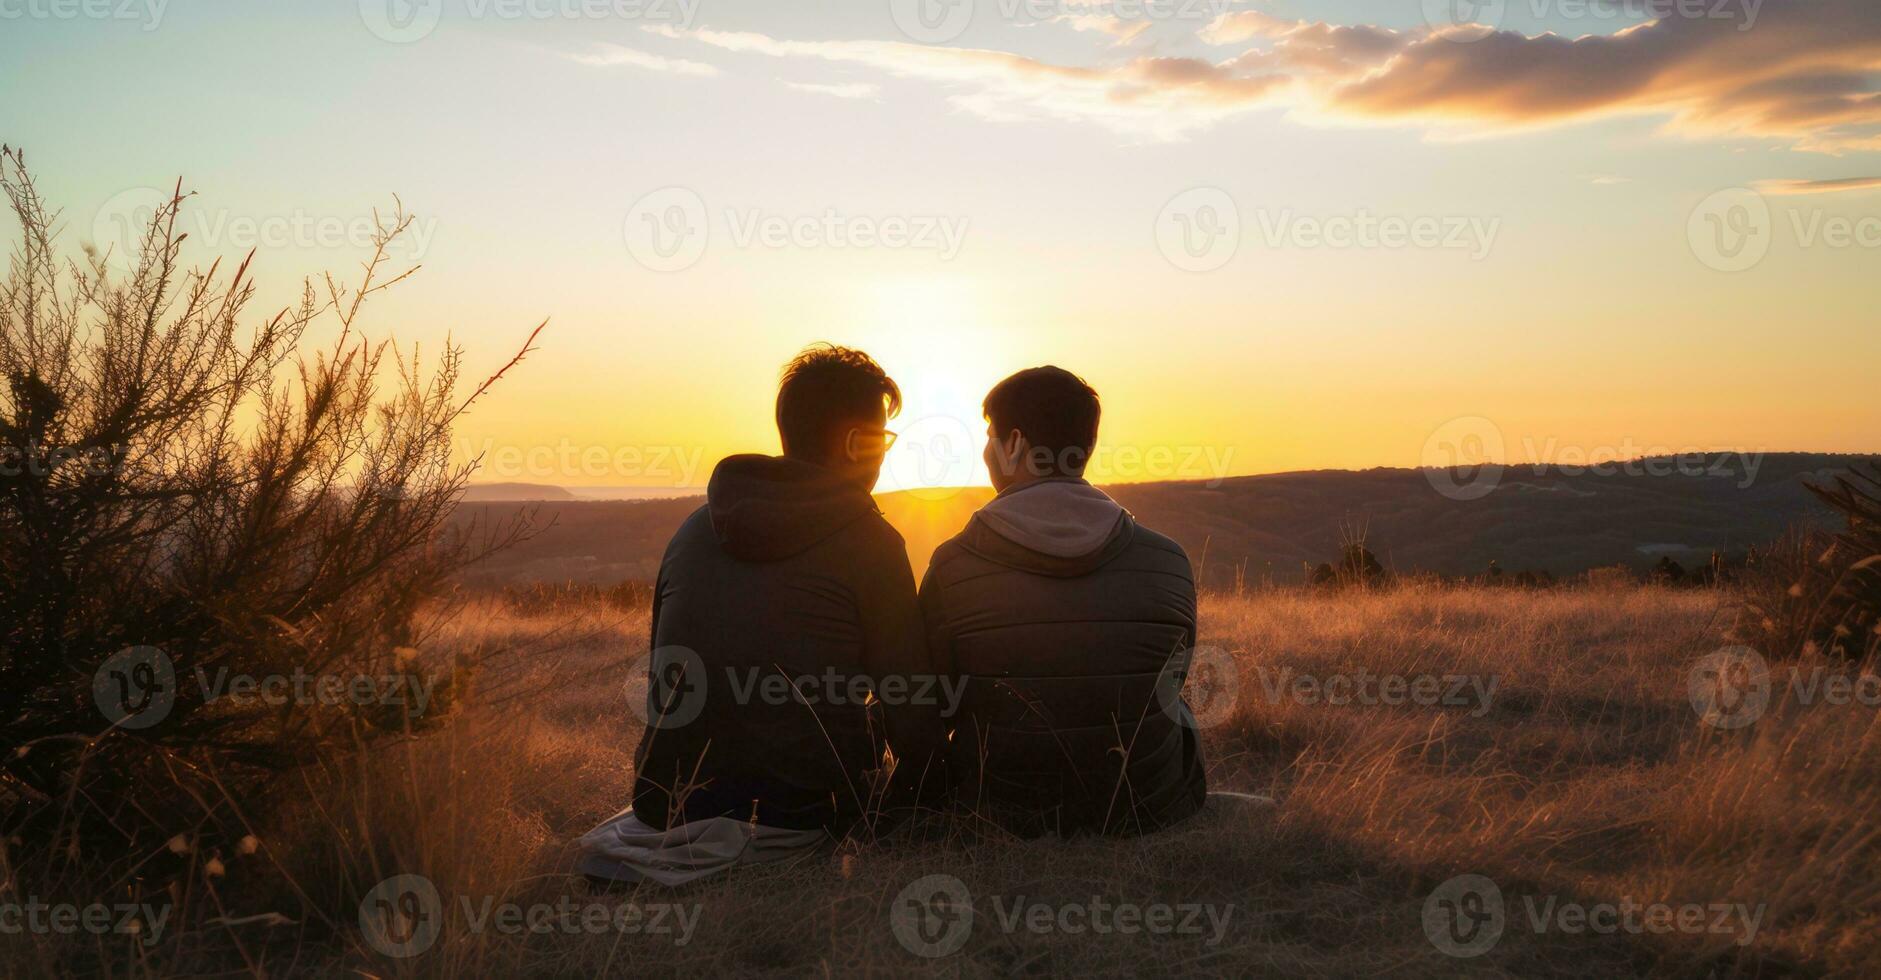 lgbtq casal assistindo pôr do sol, esperançoso olhar. foto